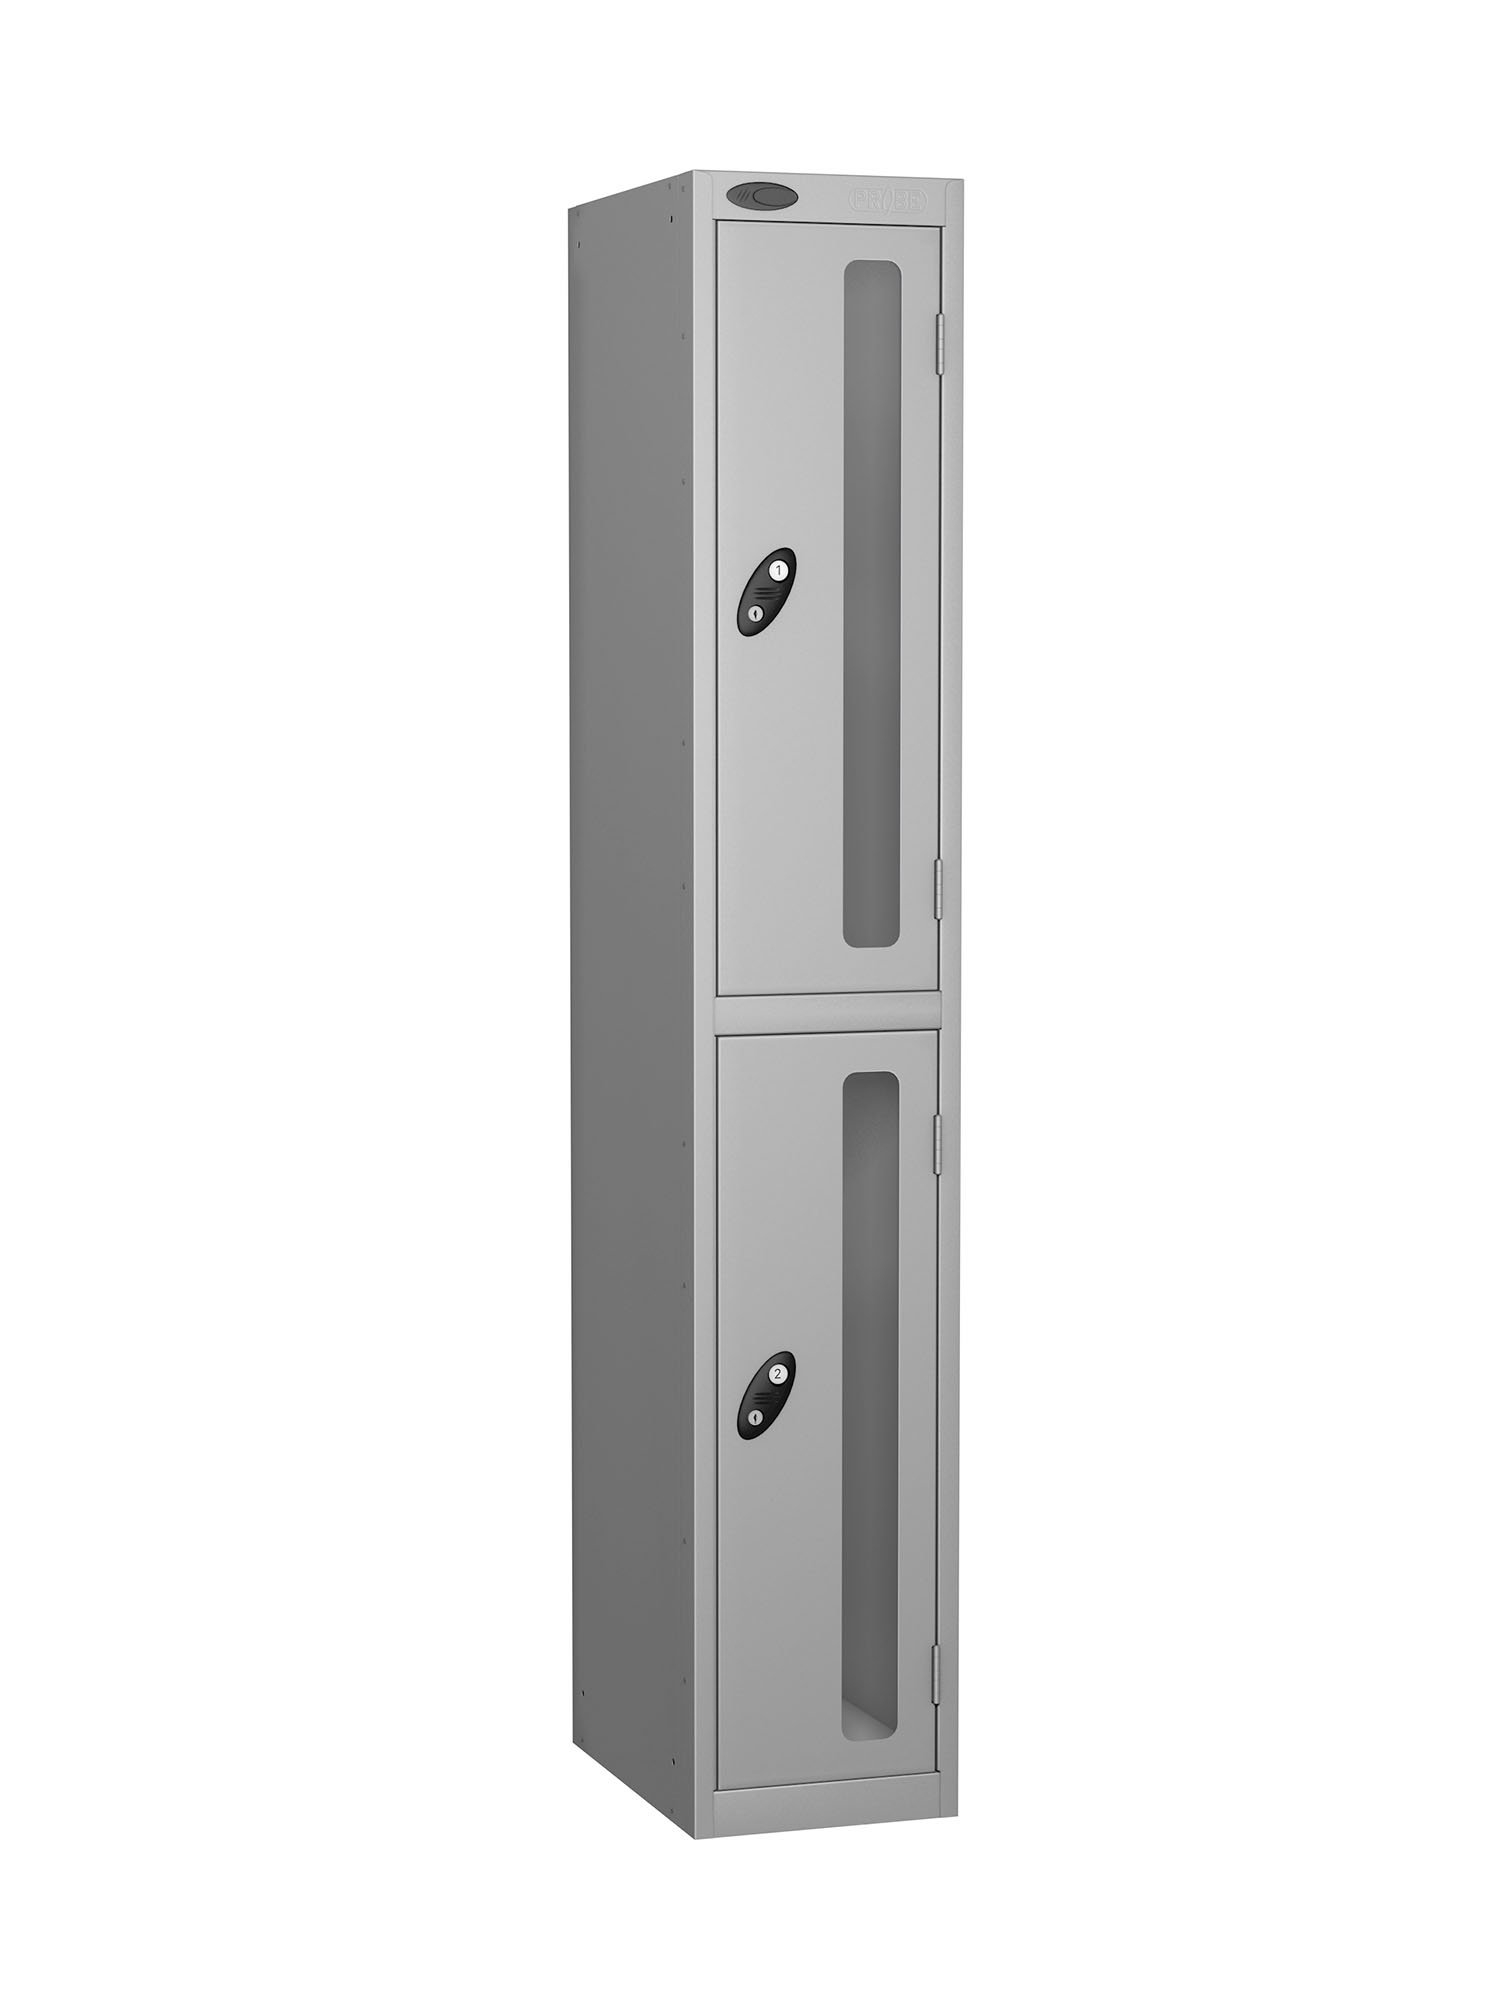 Probe 2 doors vision panel anti-stock theft locker silver